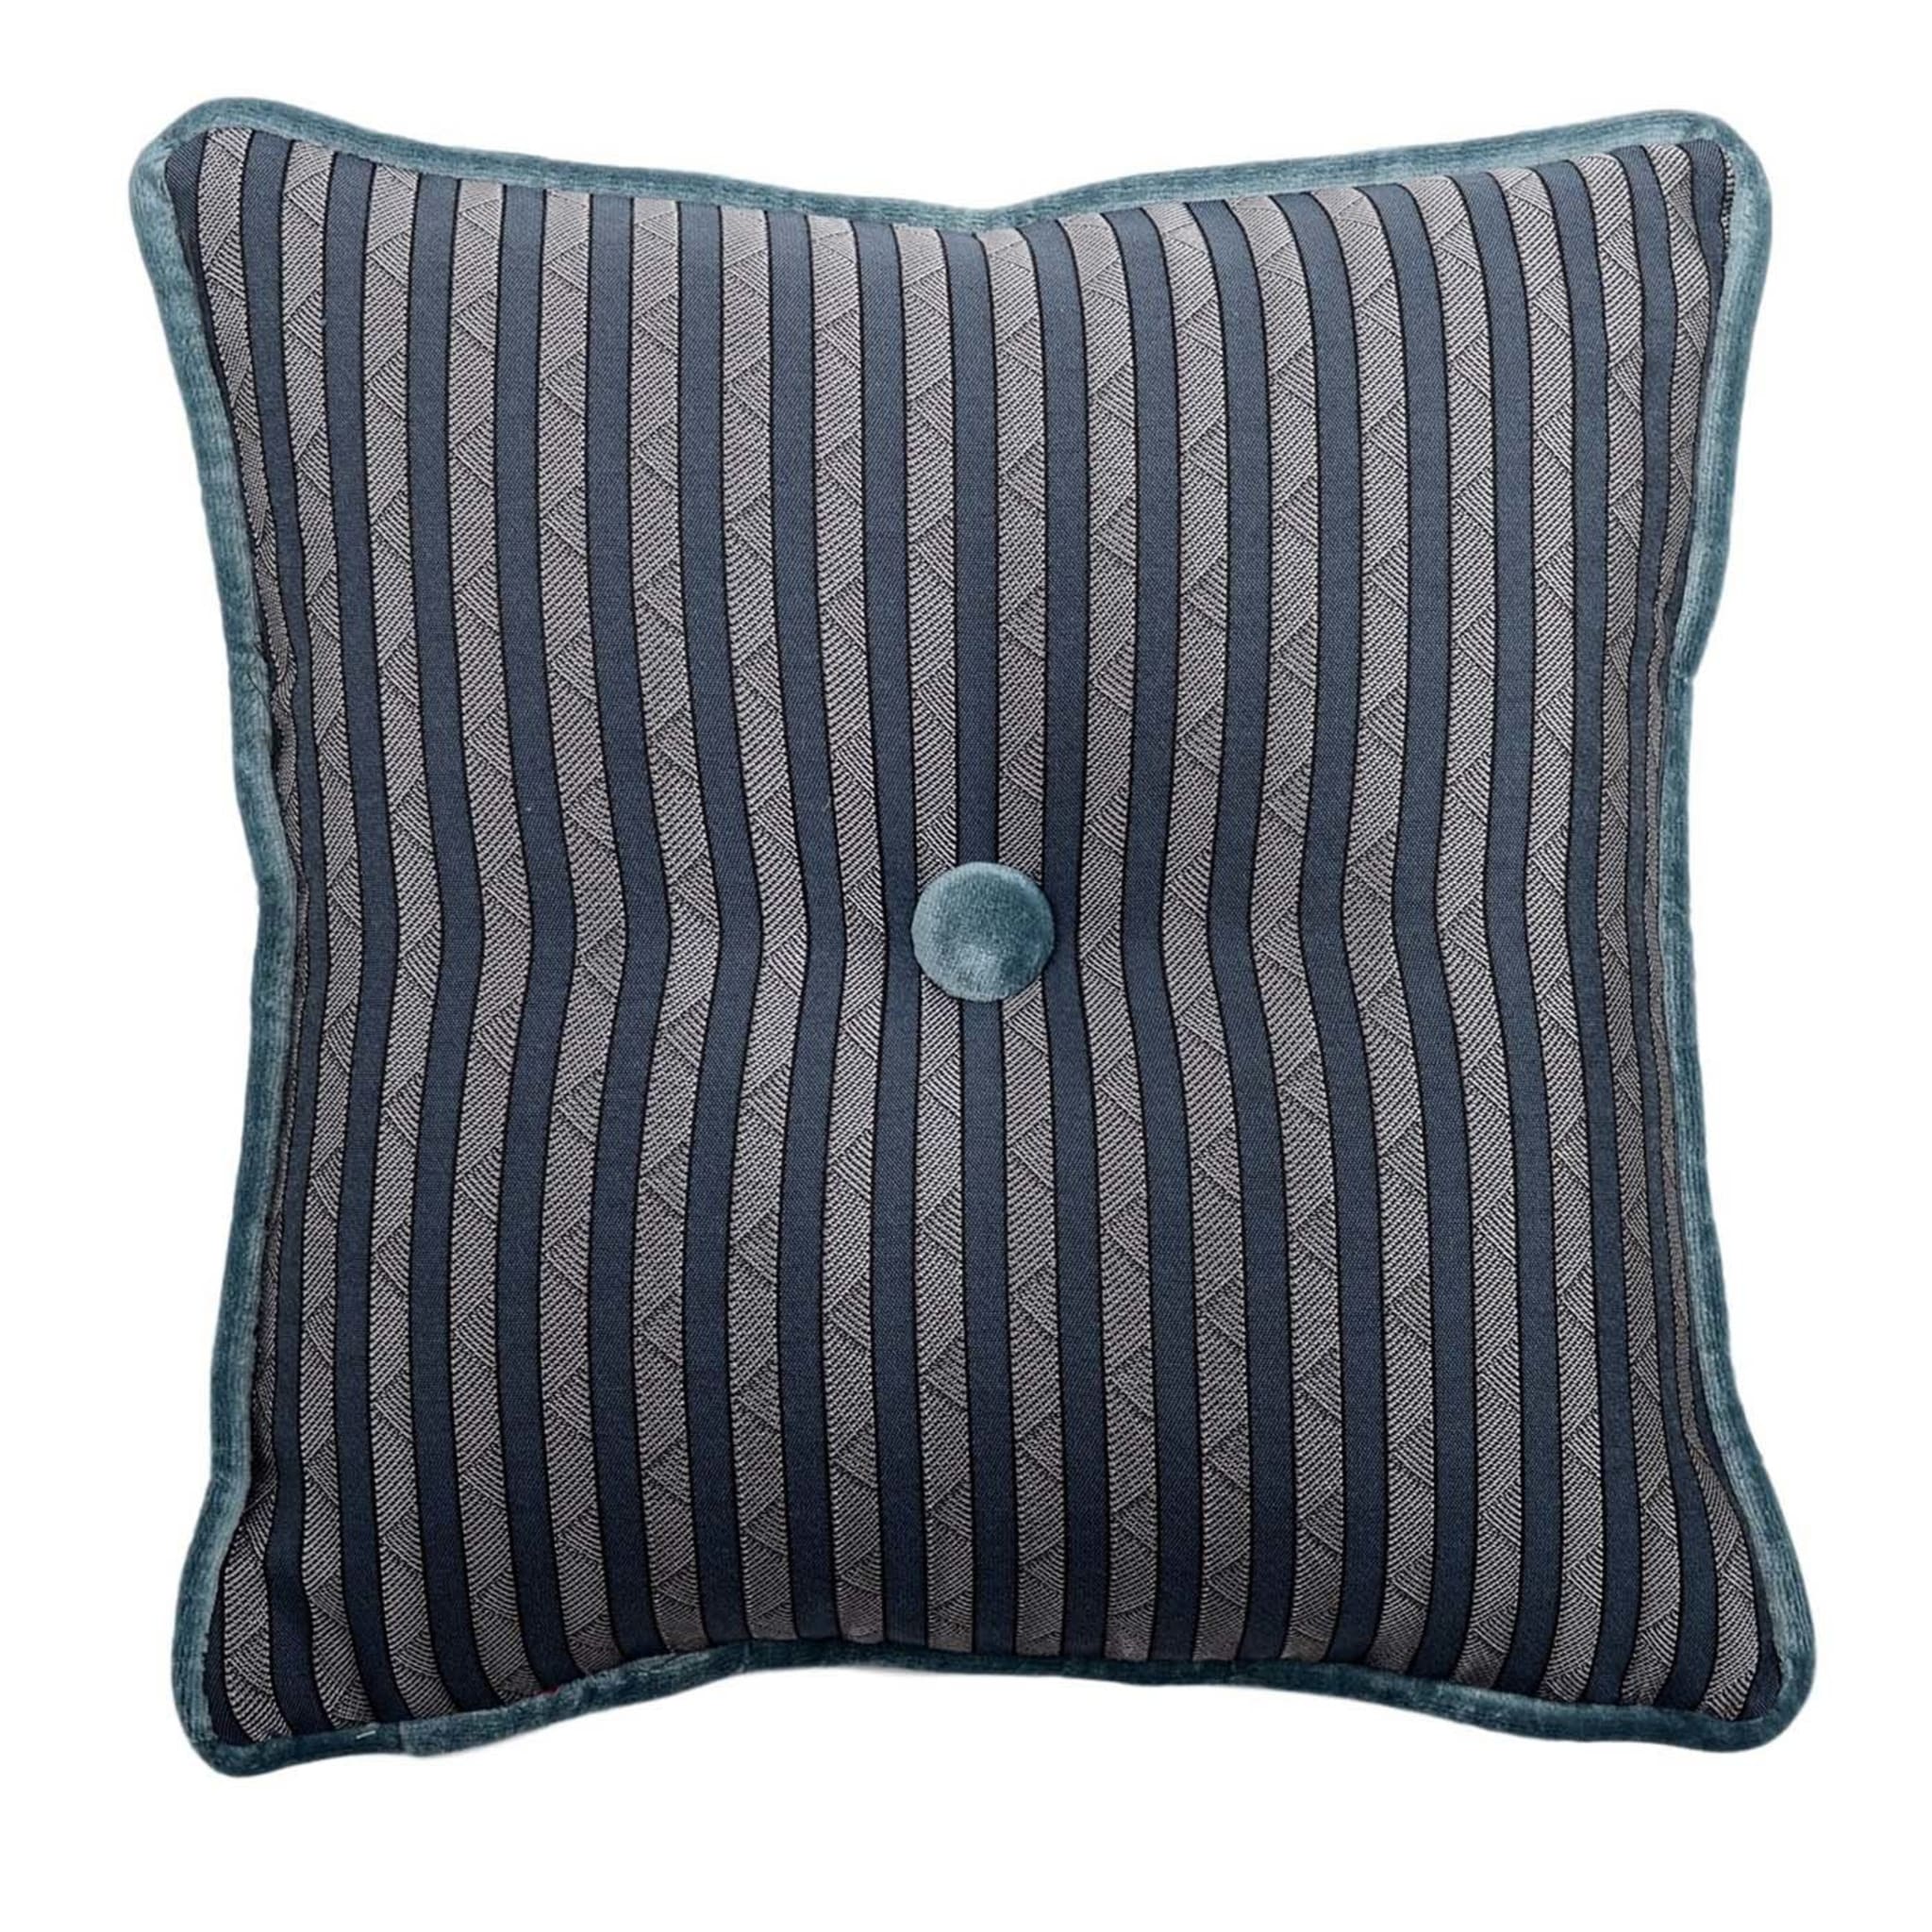 Carré Cushion in striped jacquard fabric - Main view